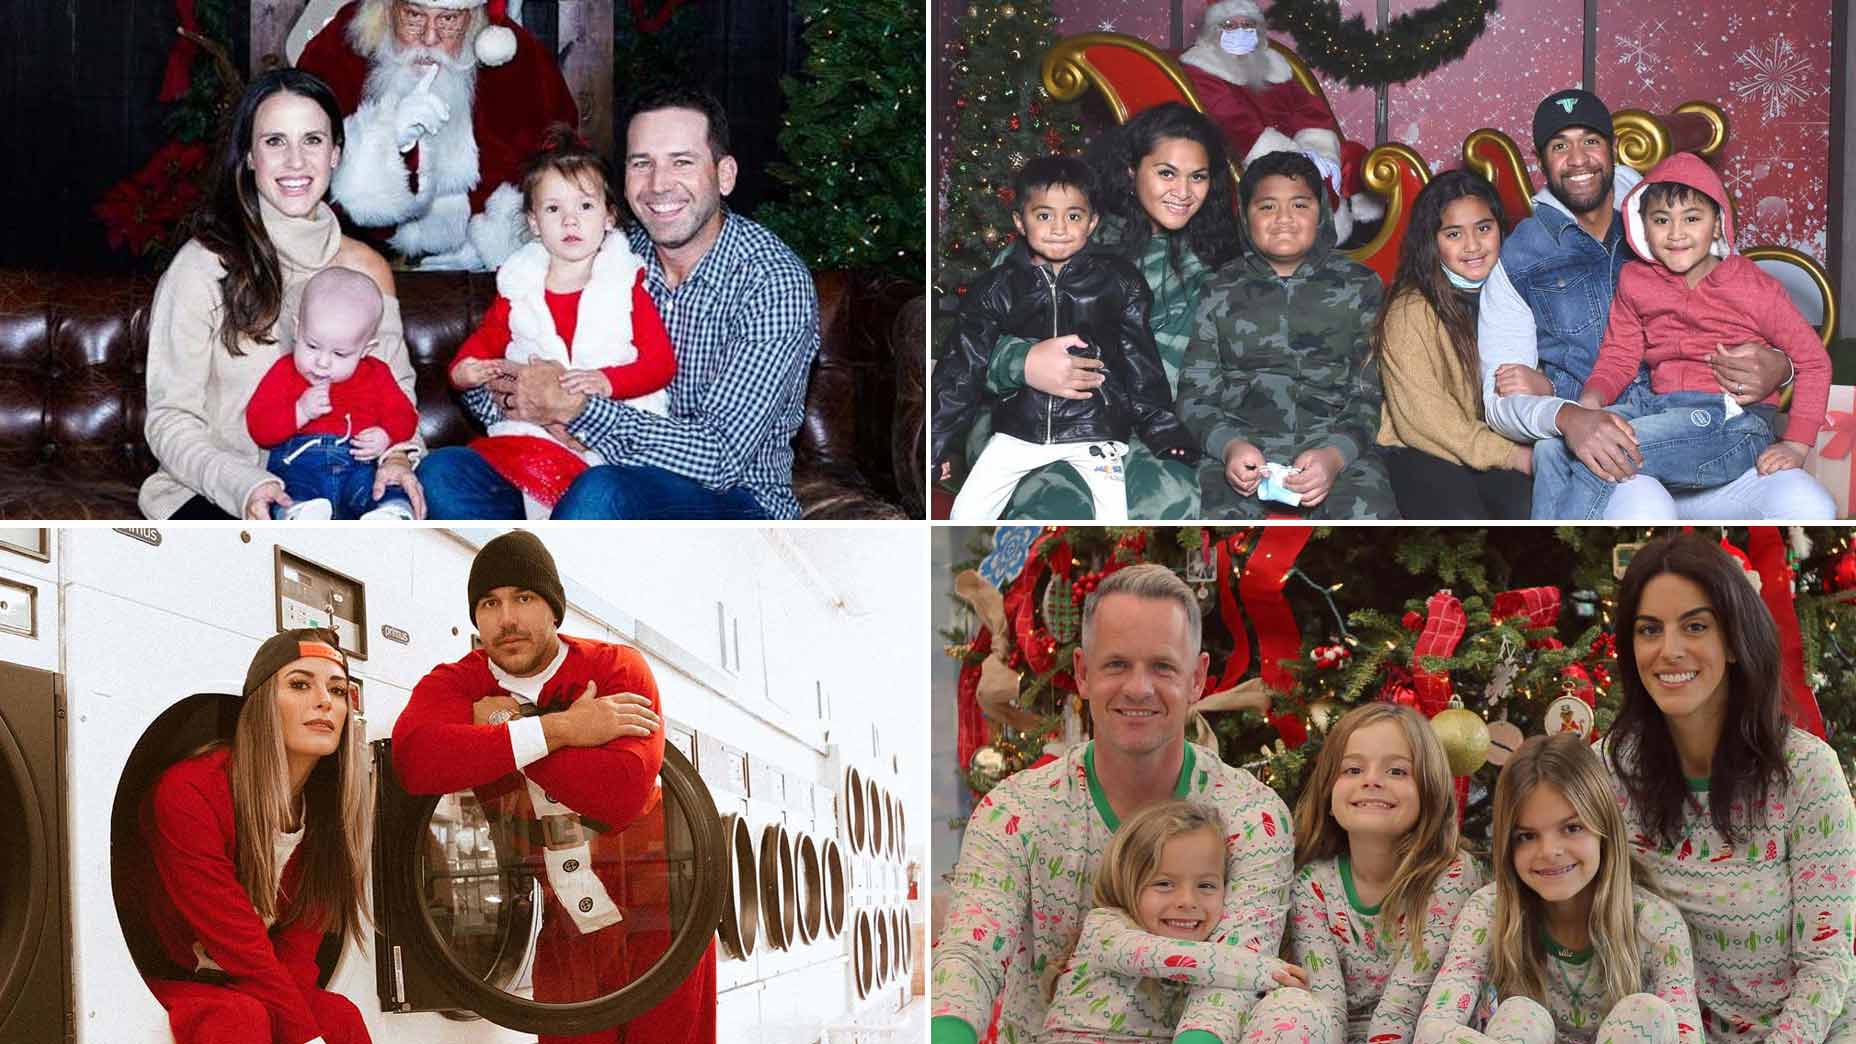 PGA Tour pros share family Christmas photos on social media